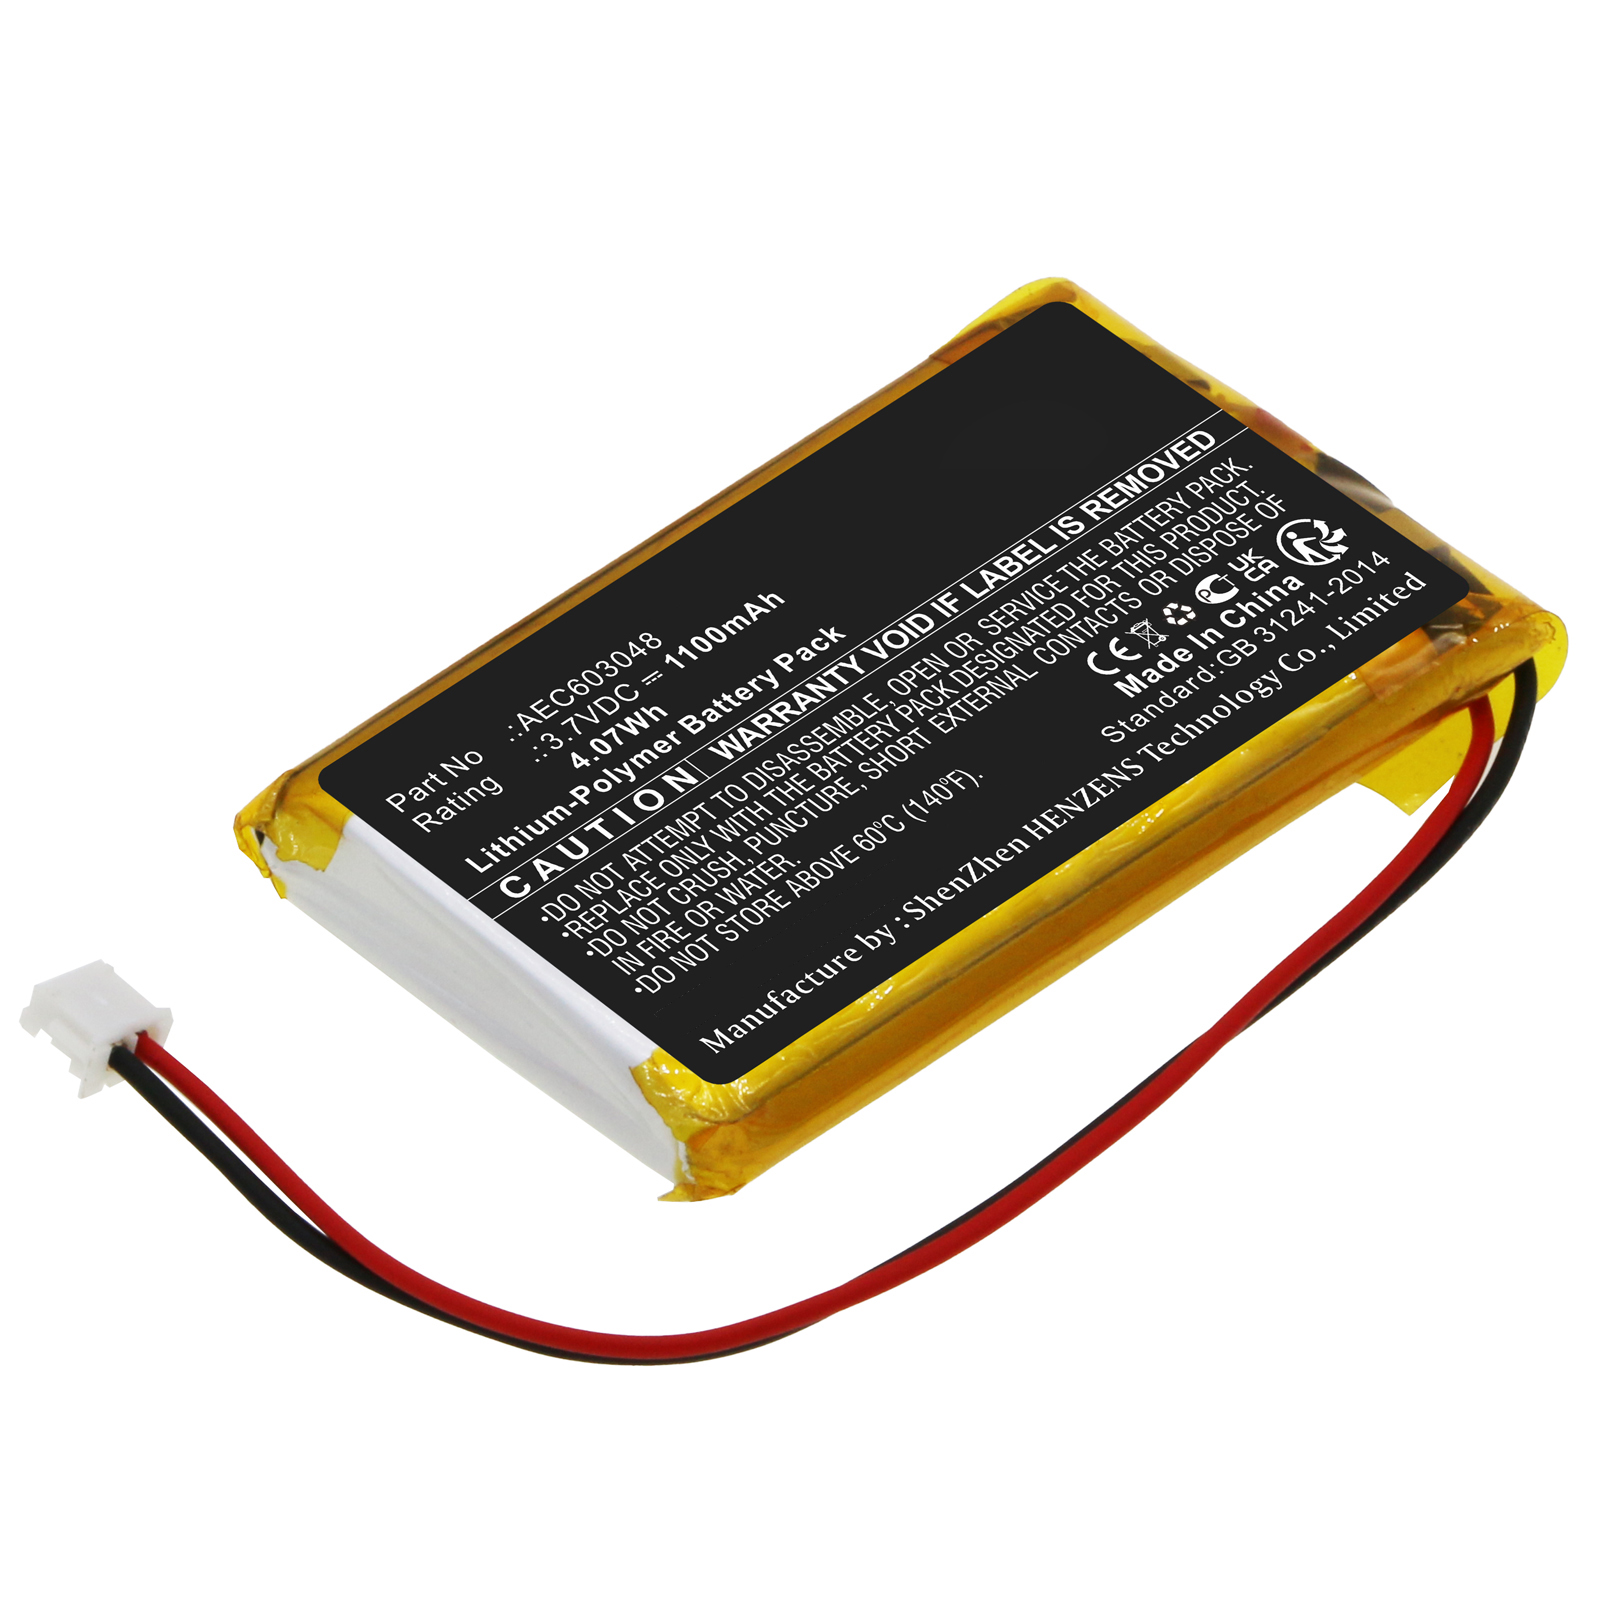 Batteries for Simrad2-Way Radio